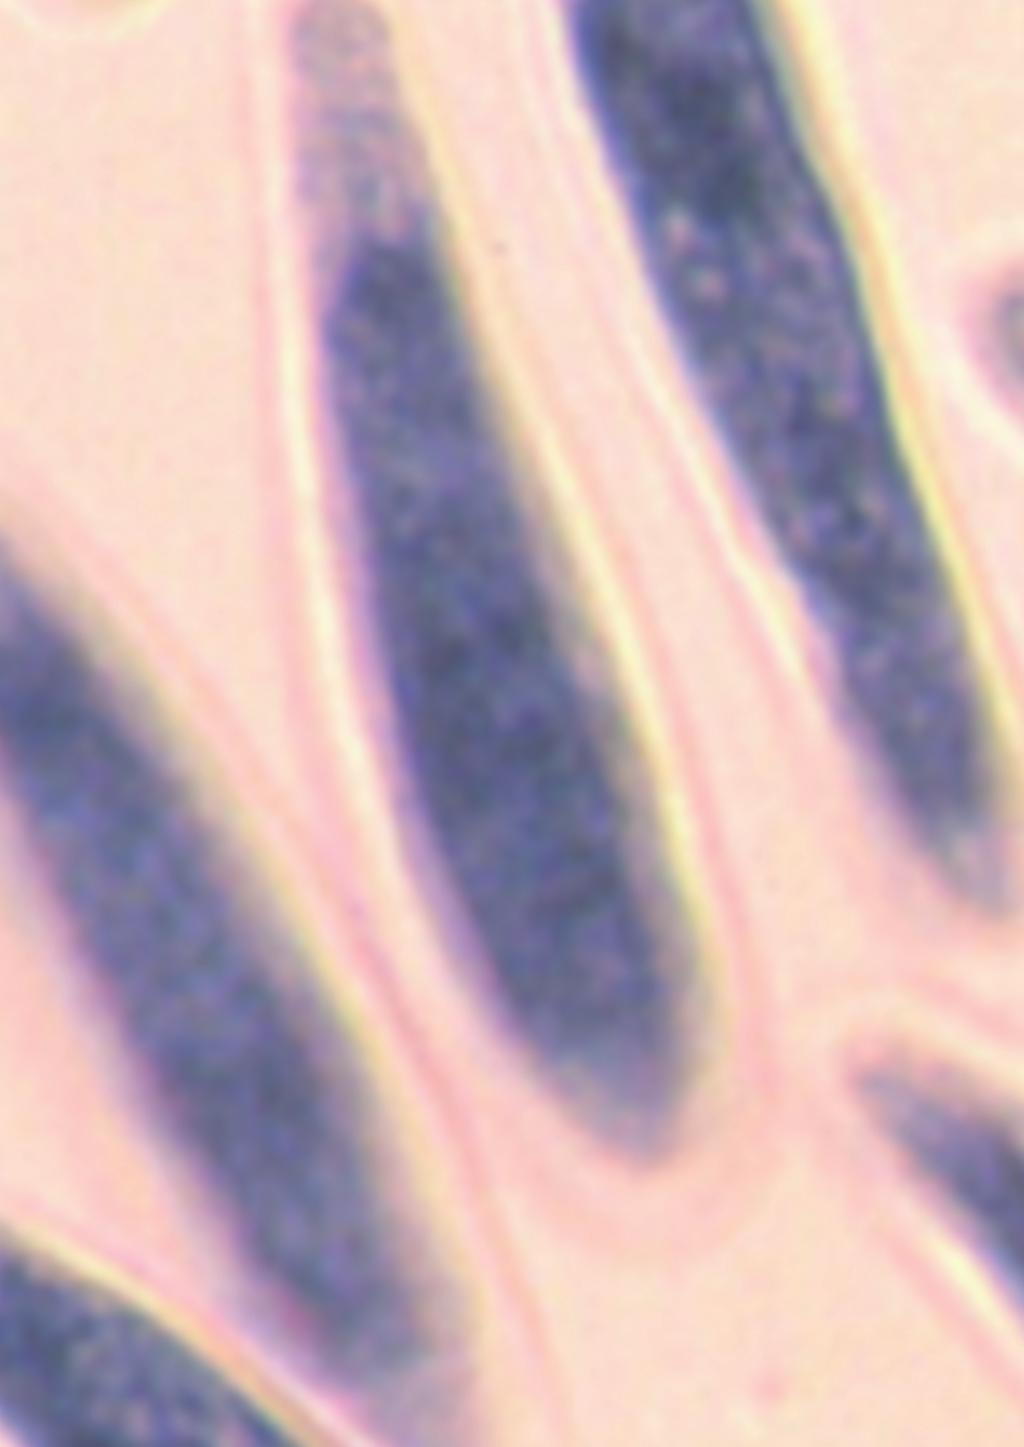 AGENTE CAUSAL Botryosphaeria dothidea (Mong.:Fr.) Ces. et de Not. (Anamorfo: Fusicoccum aesculi). ESPECIES SUSCEPTIBLES El complejo B. dothidea / B.